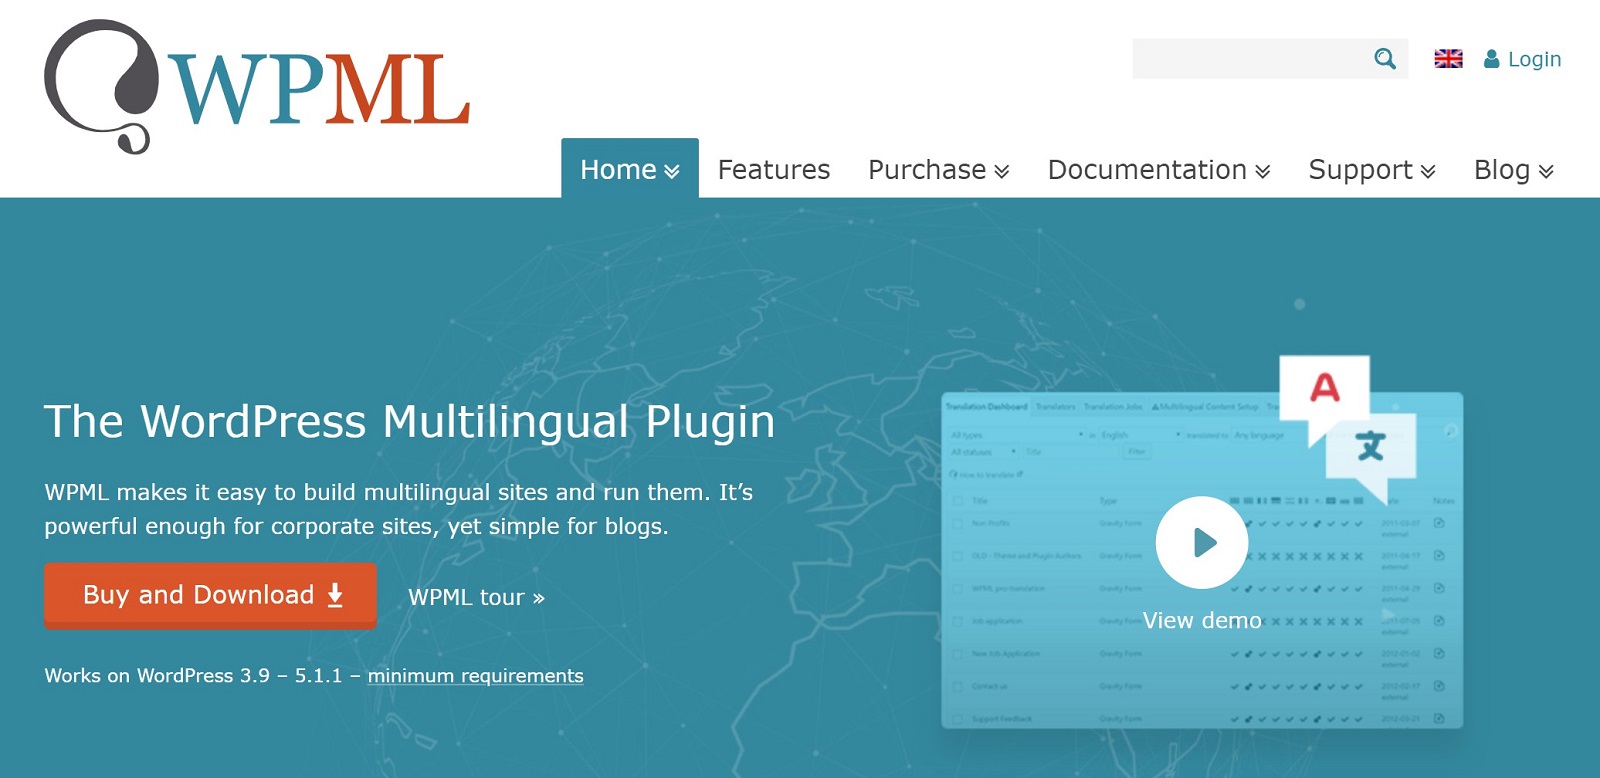 WPML WordPress multilingual plugin